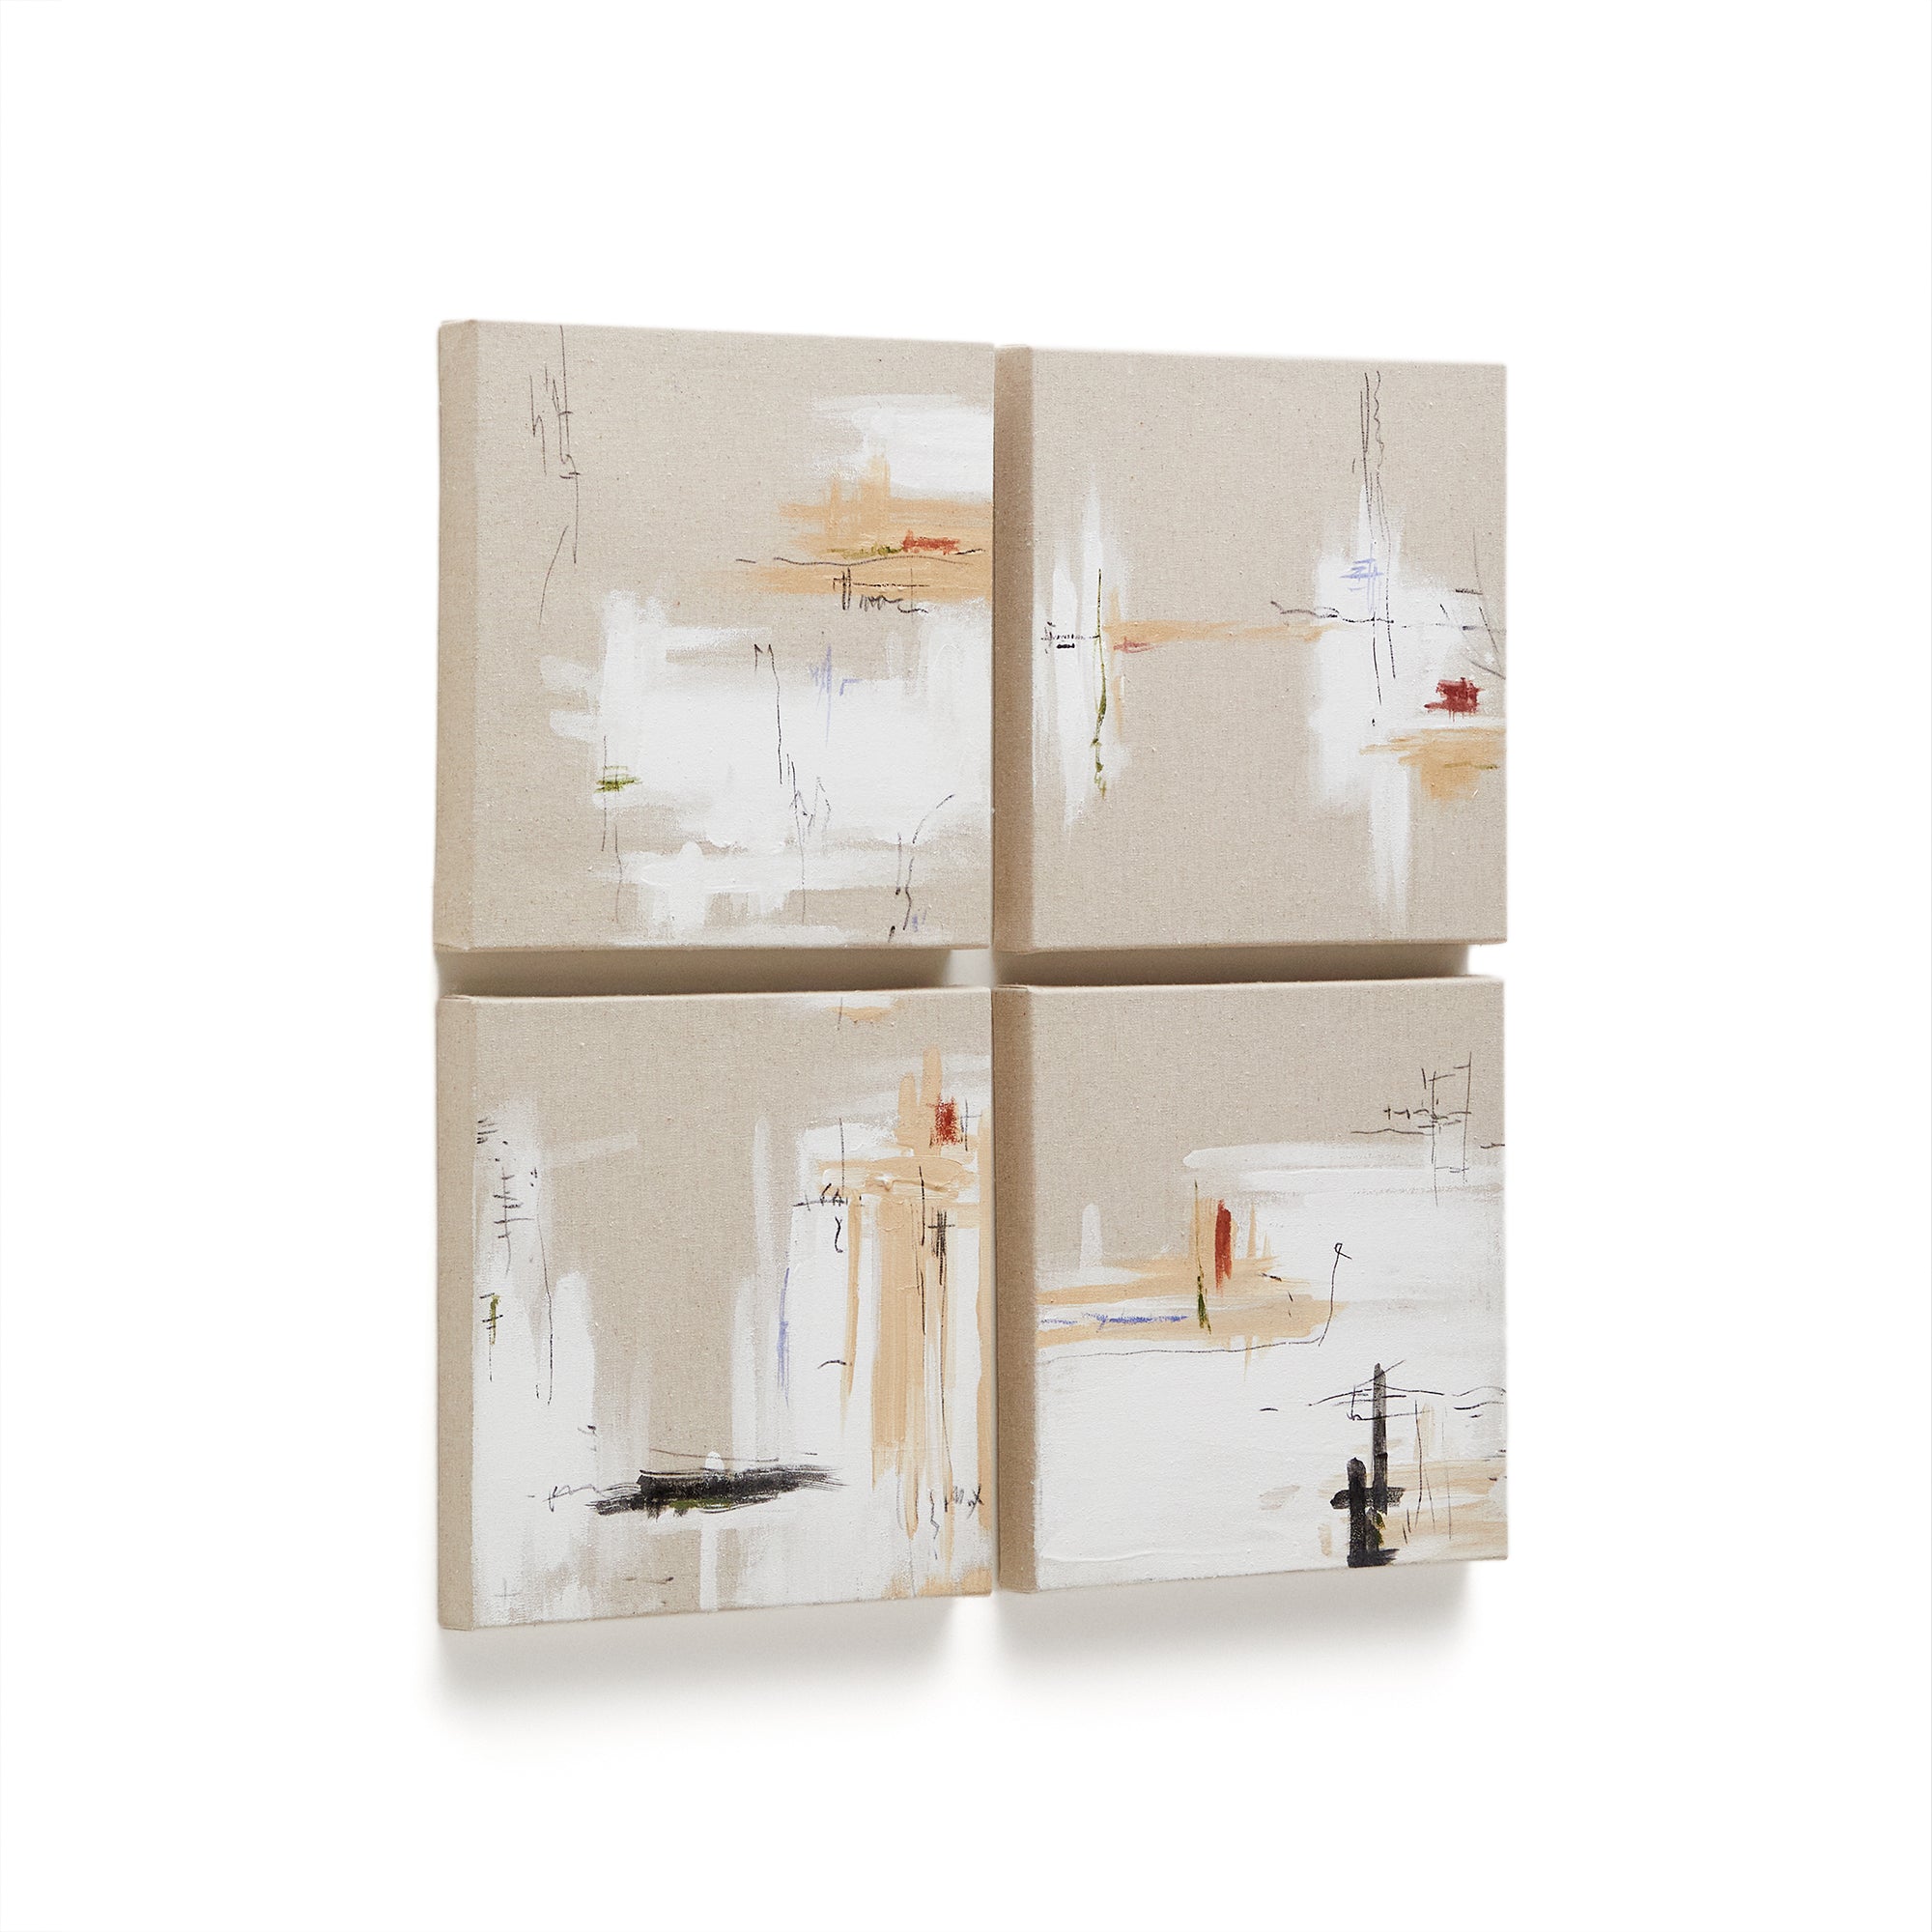 Selnir set of 4 white and beige canvas frames, 30 x 30 cm